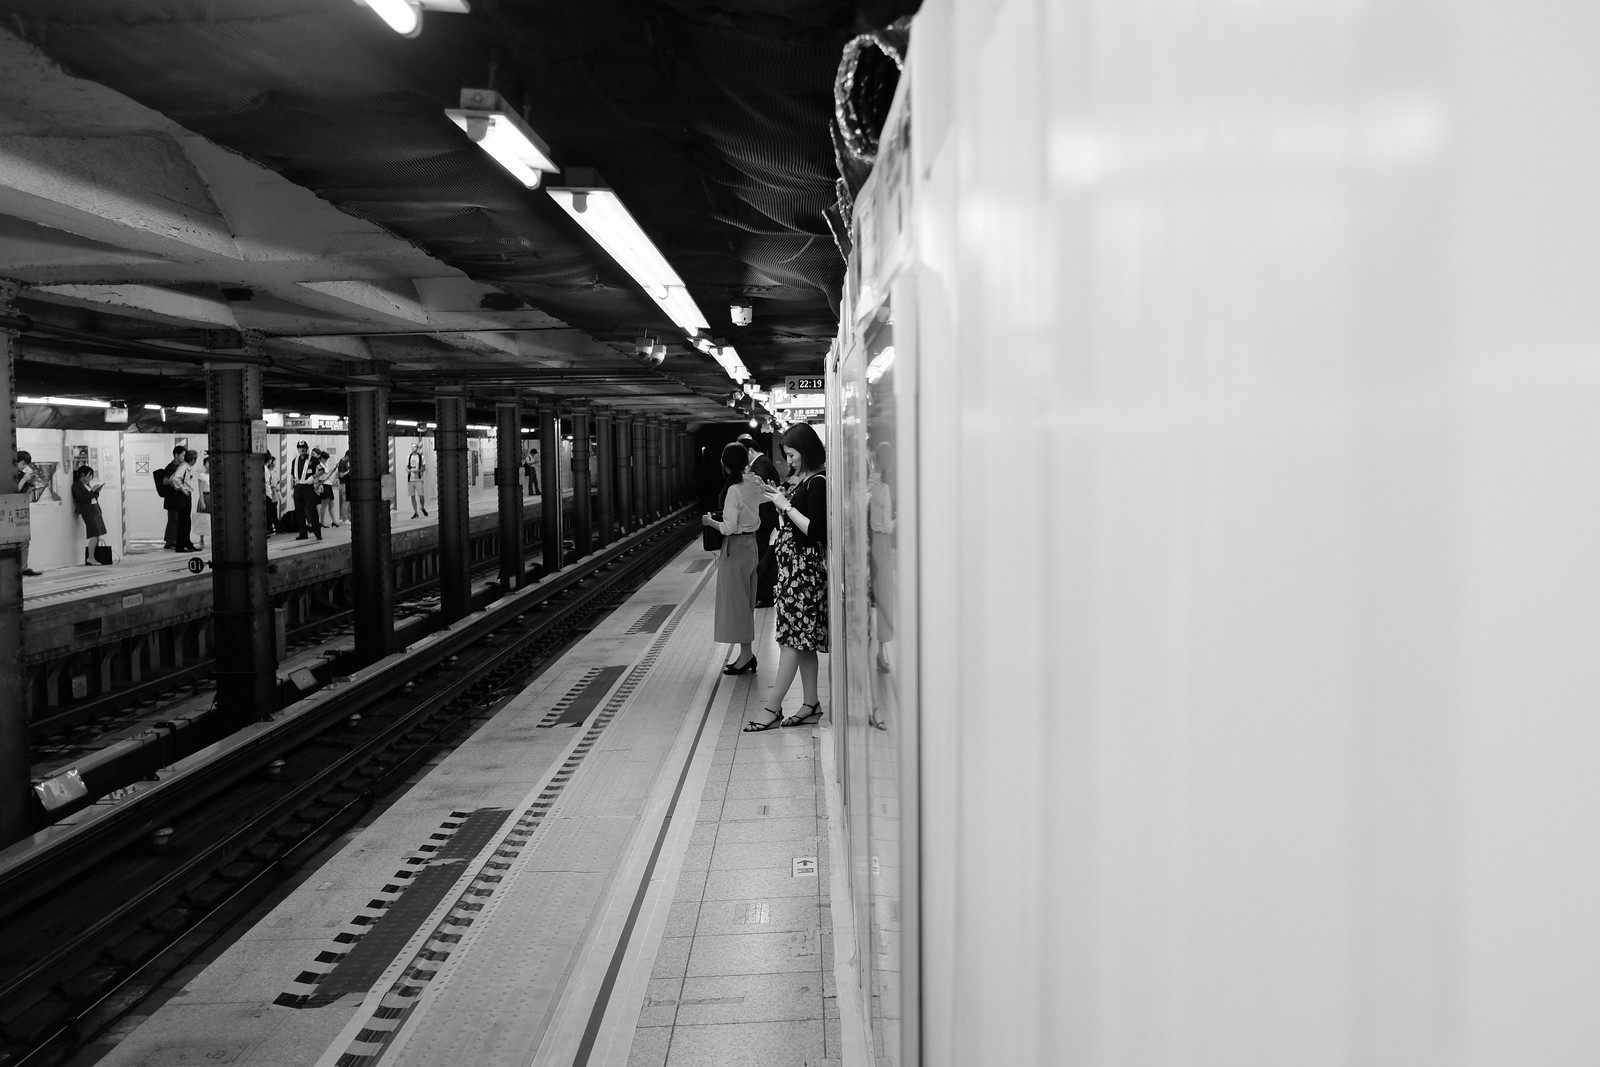 The Suehirocho station taken by FUJIFILM X100S.